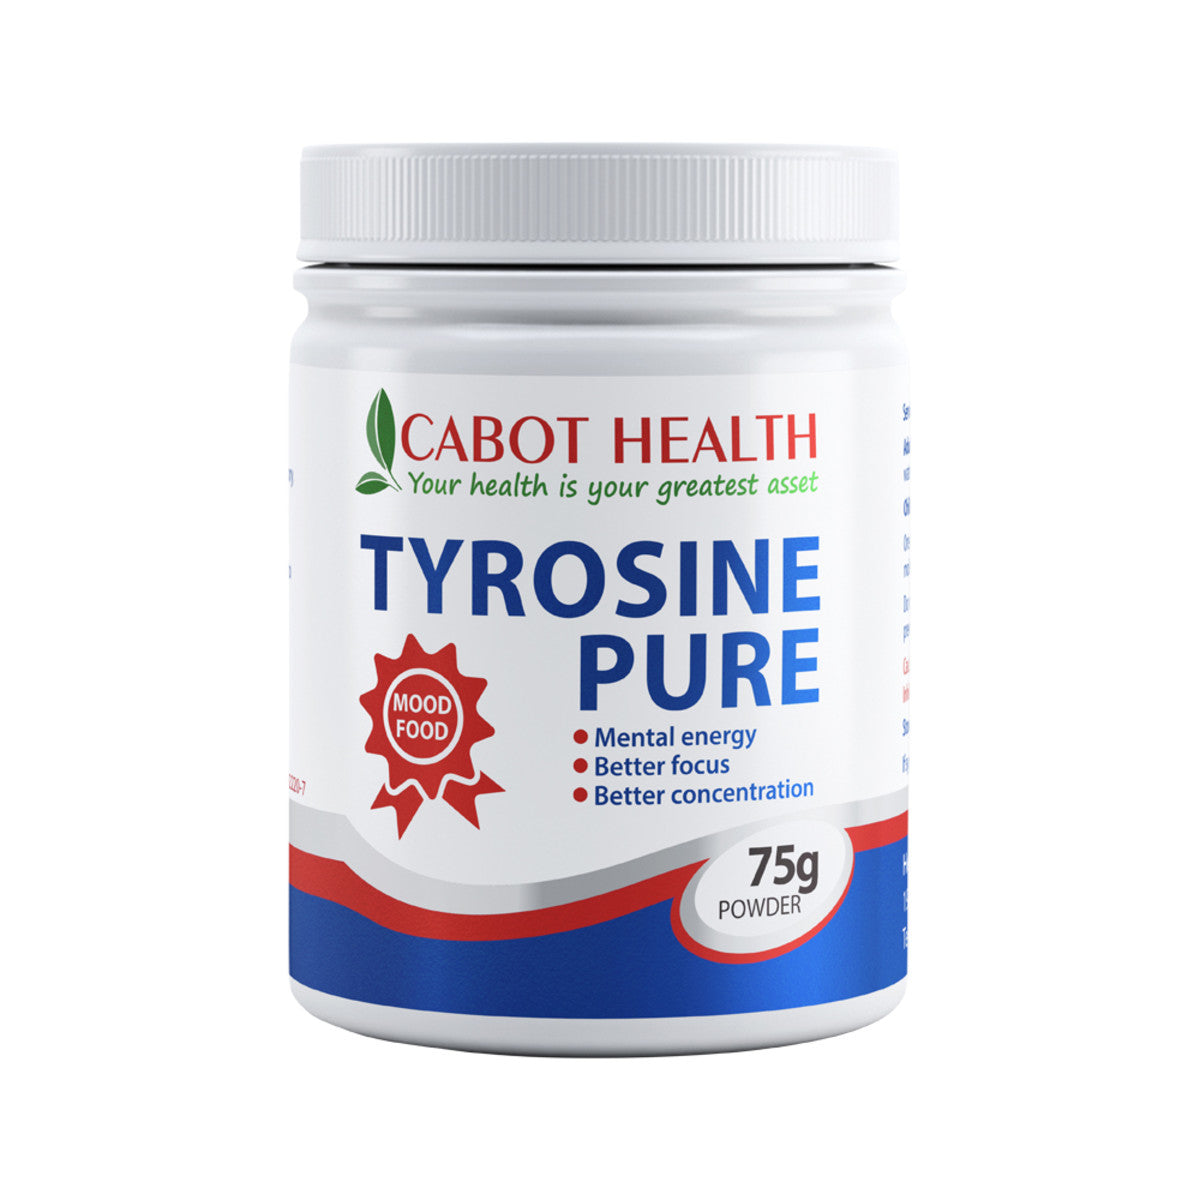 Cabot Health - Tyrosine Pure